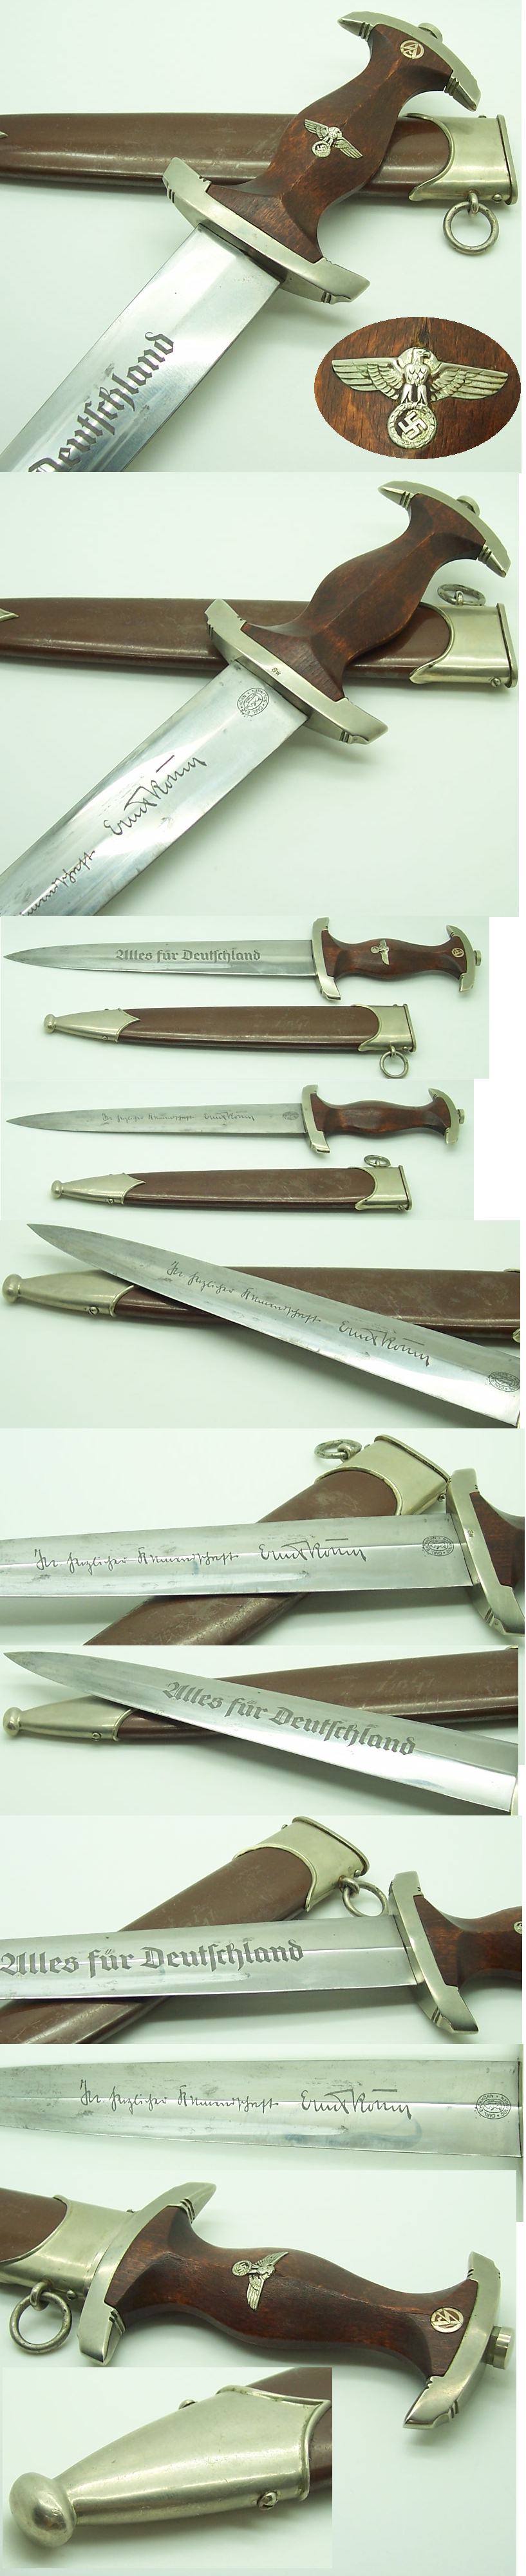 Full Rohm SA Dagger by C. Eickhorn